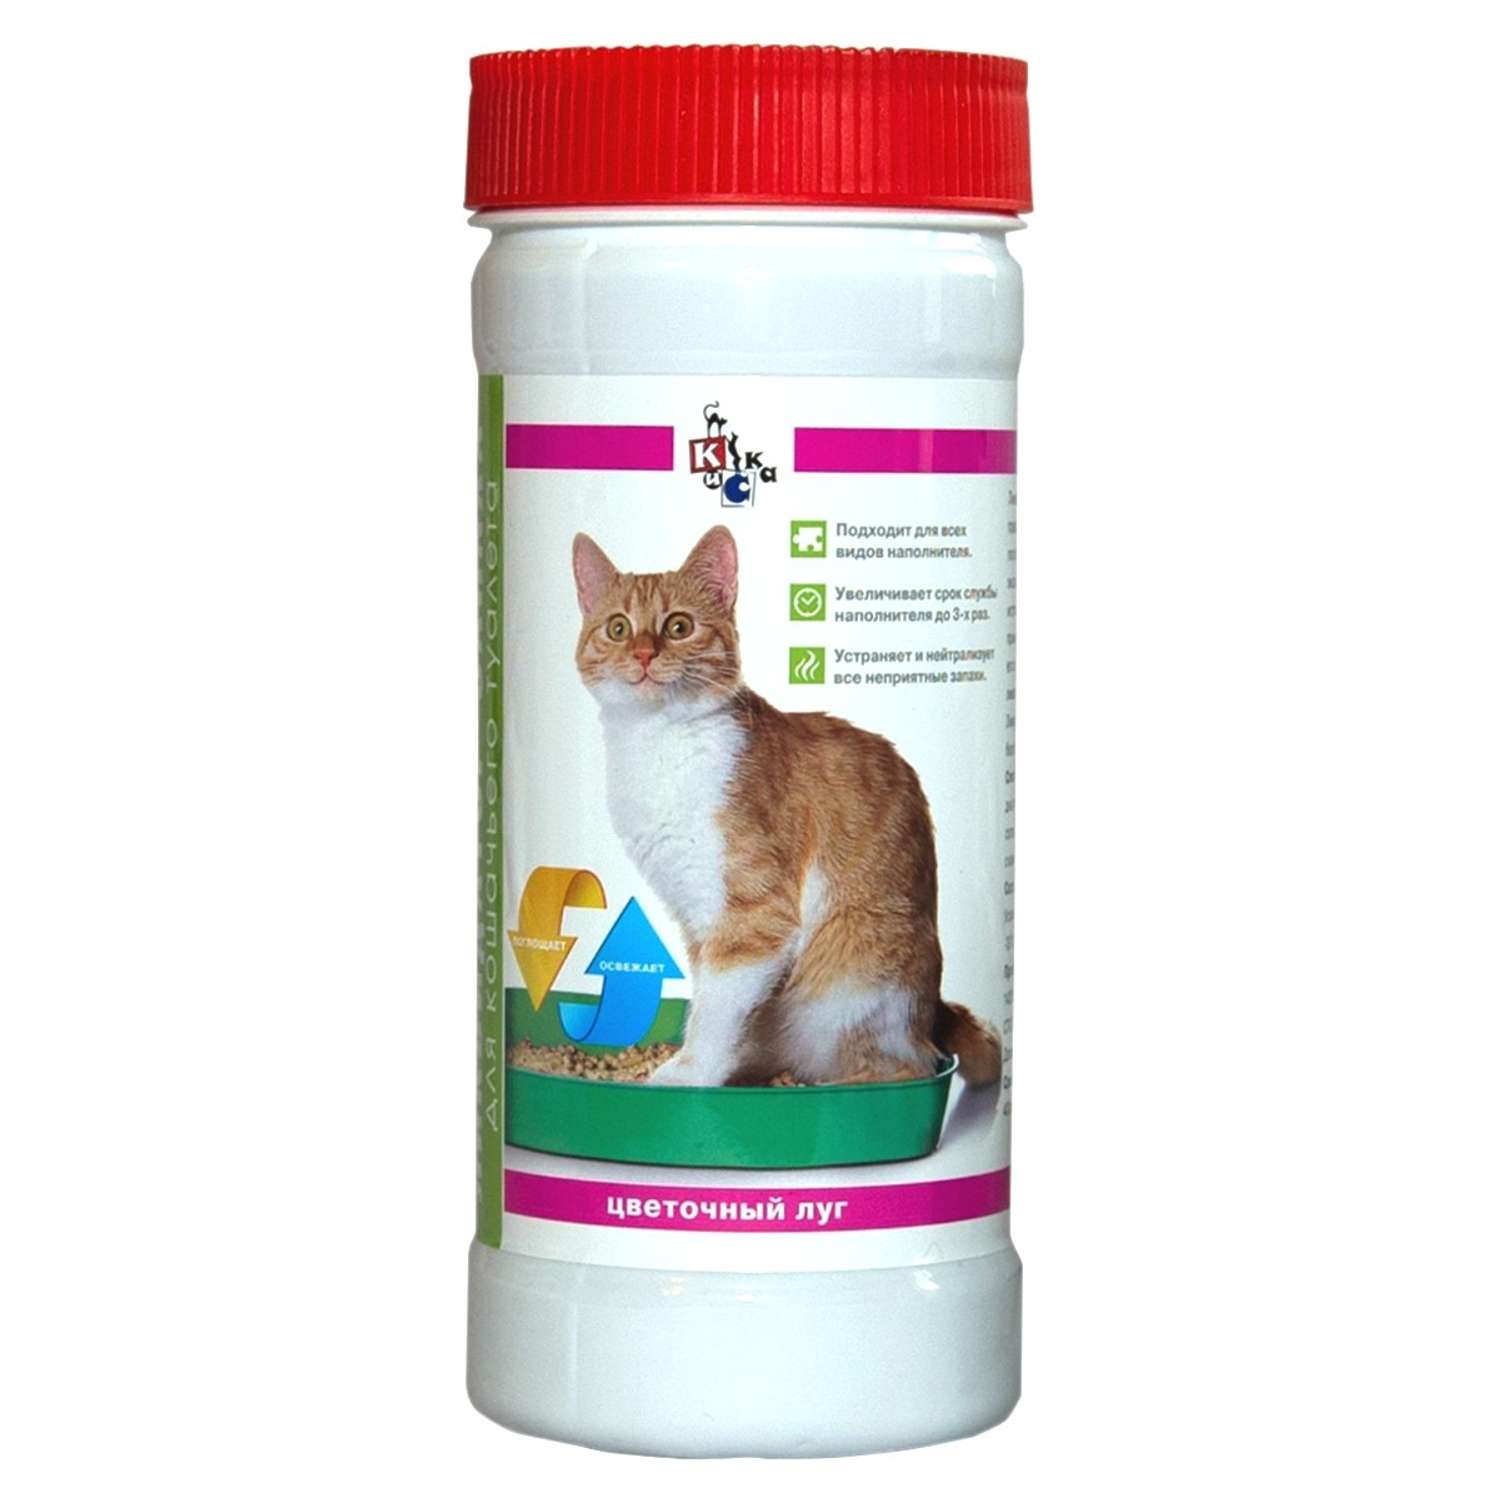 Ликвидатор запаха КиСка для кошачьего туалета Цветочный луг 400 г - фото 1